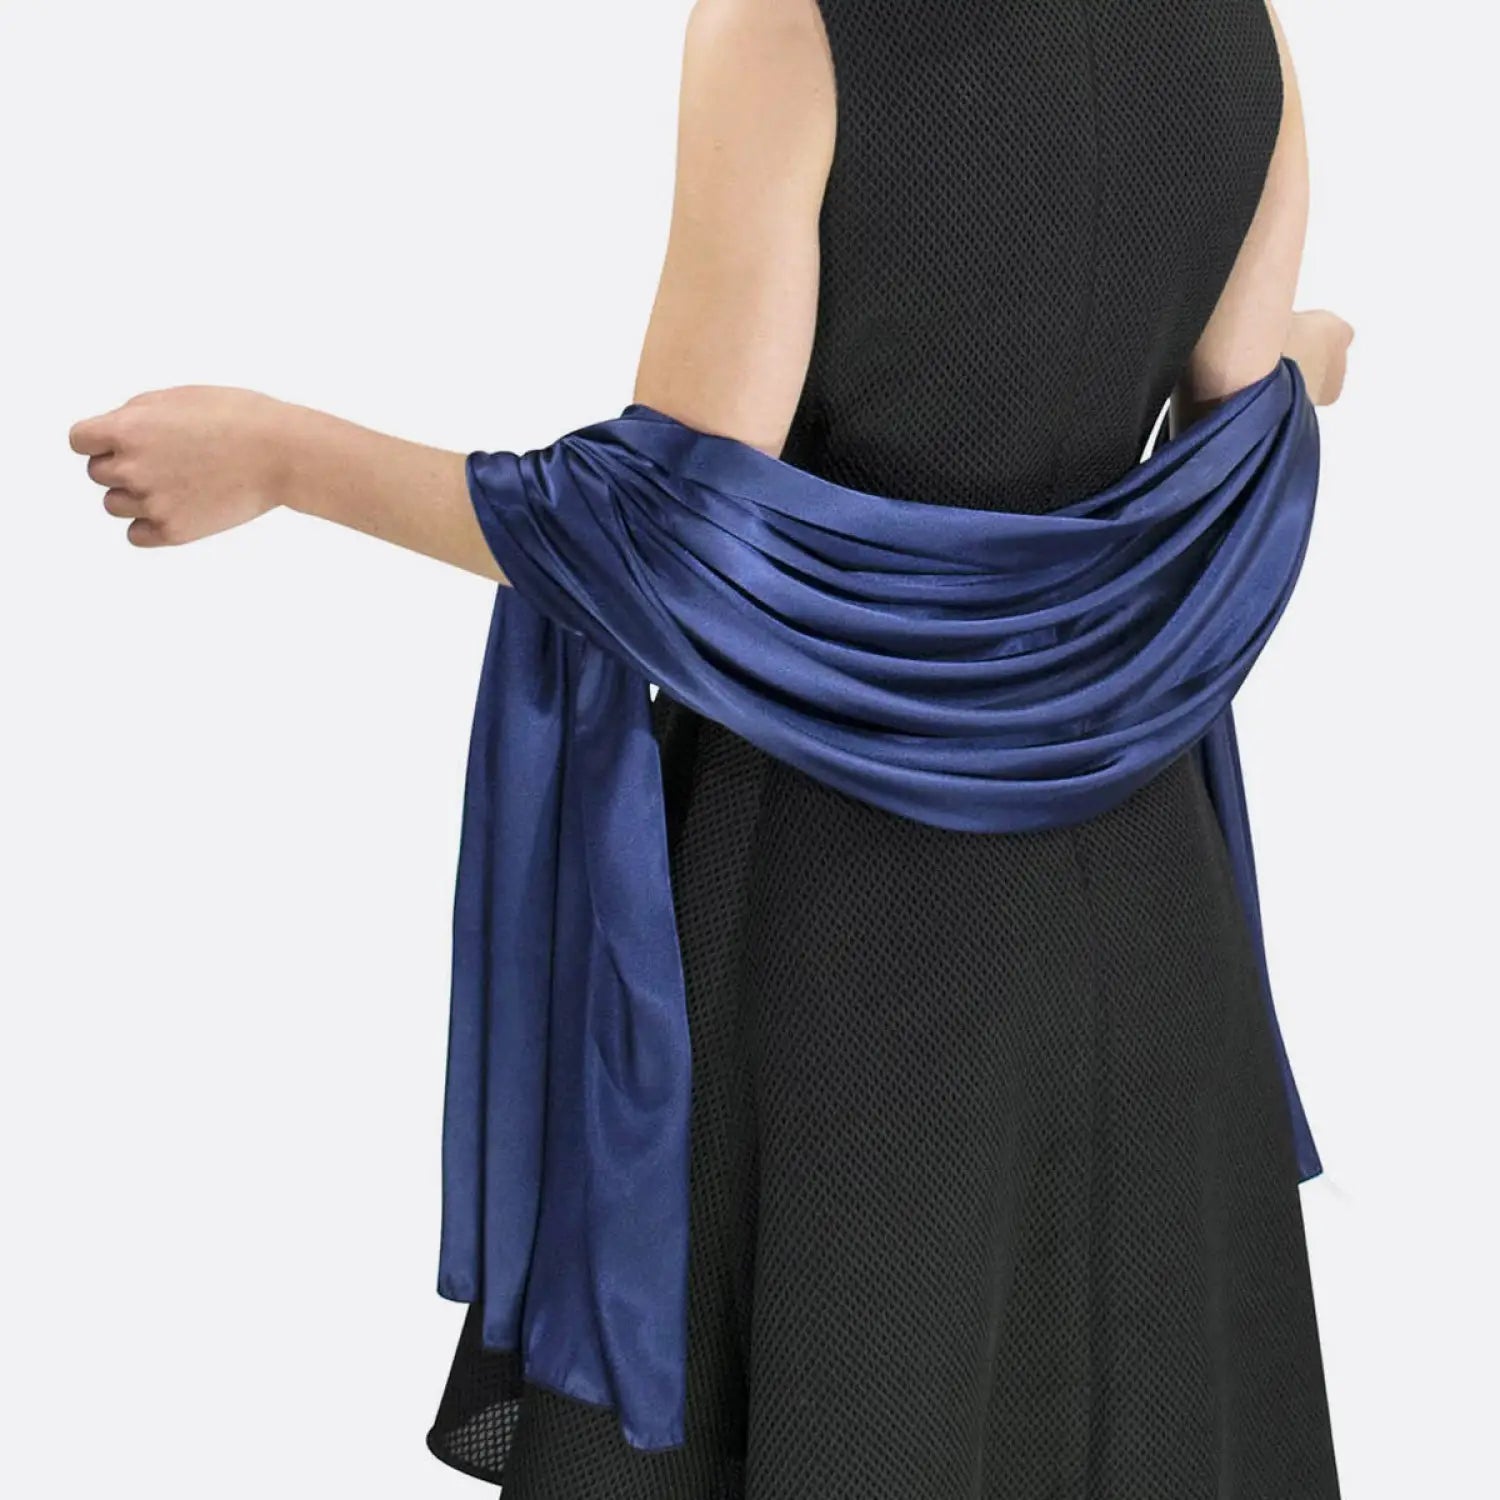 Elegant satin evening shawl - woman wearing blue scarf